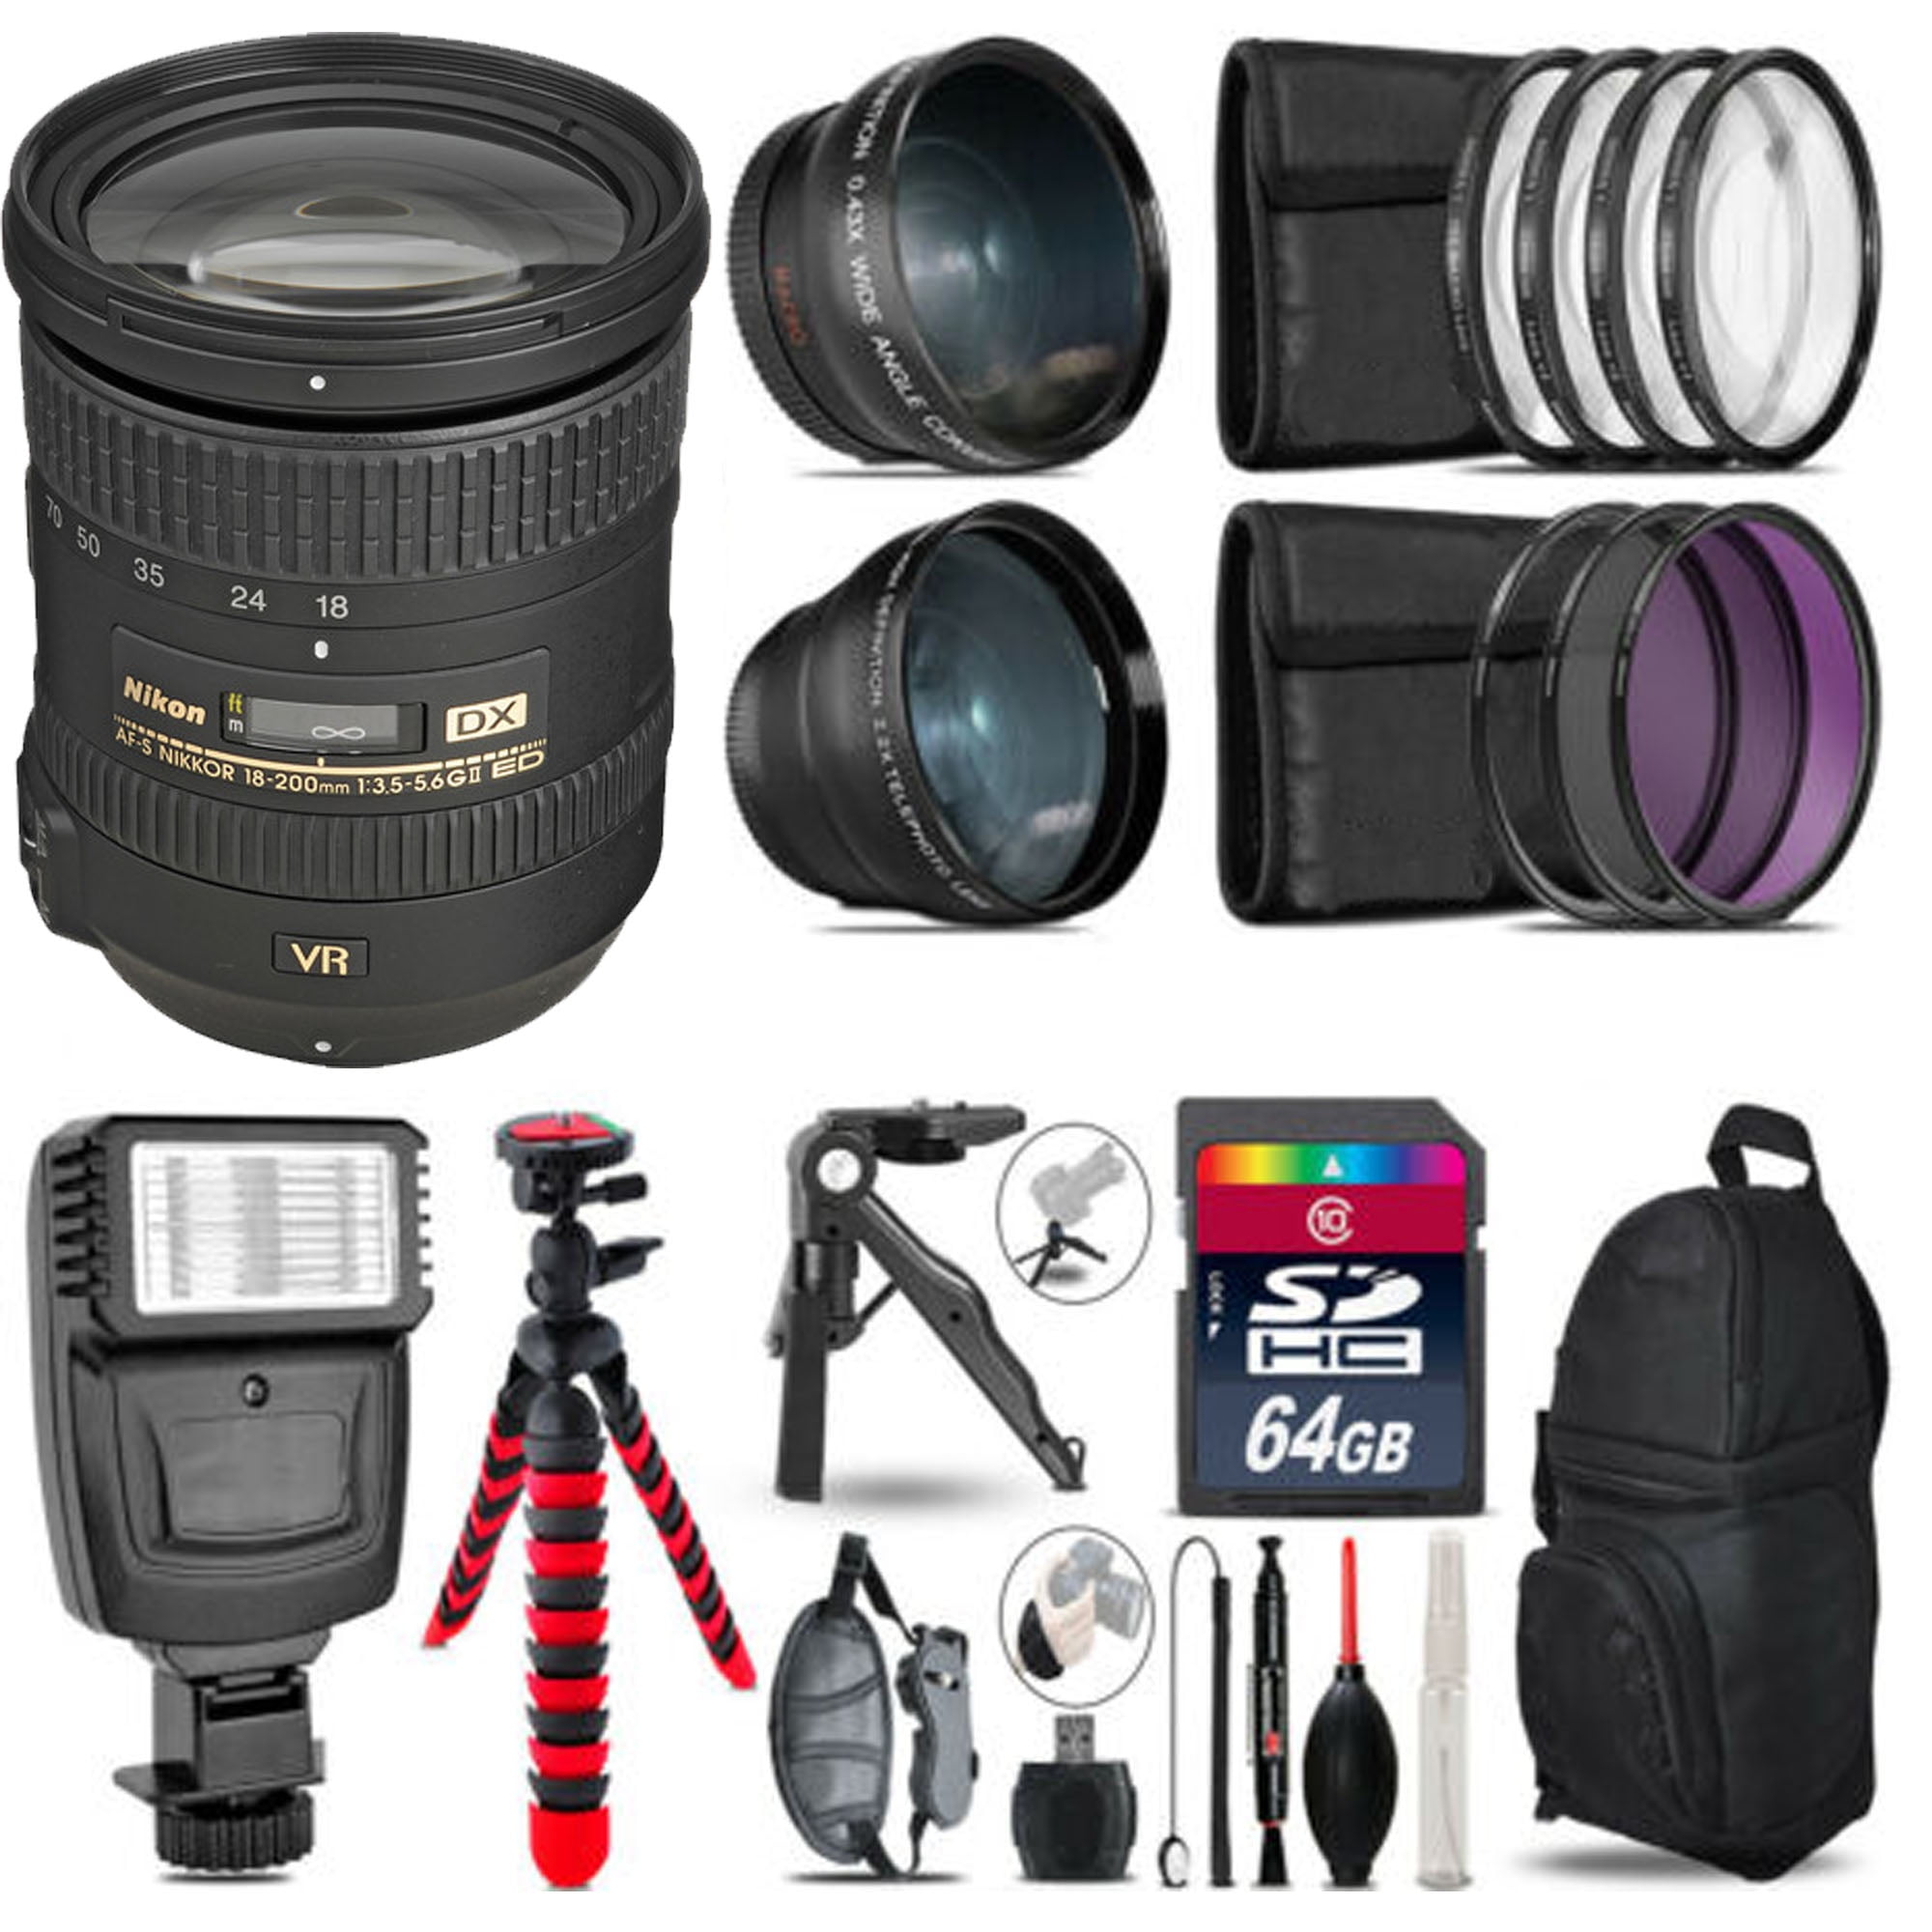 White Box Nikon AF-S DX NIKKOR 18-200mm f/3.5-5.6G ED VR II Lens Bundled Accessory Kit 